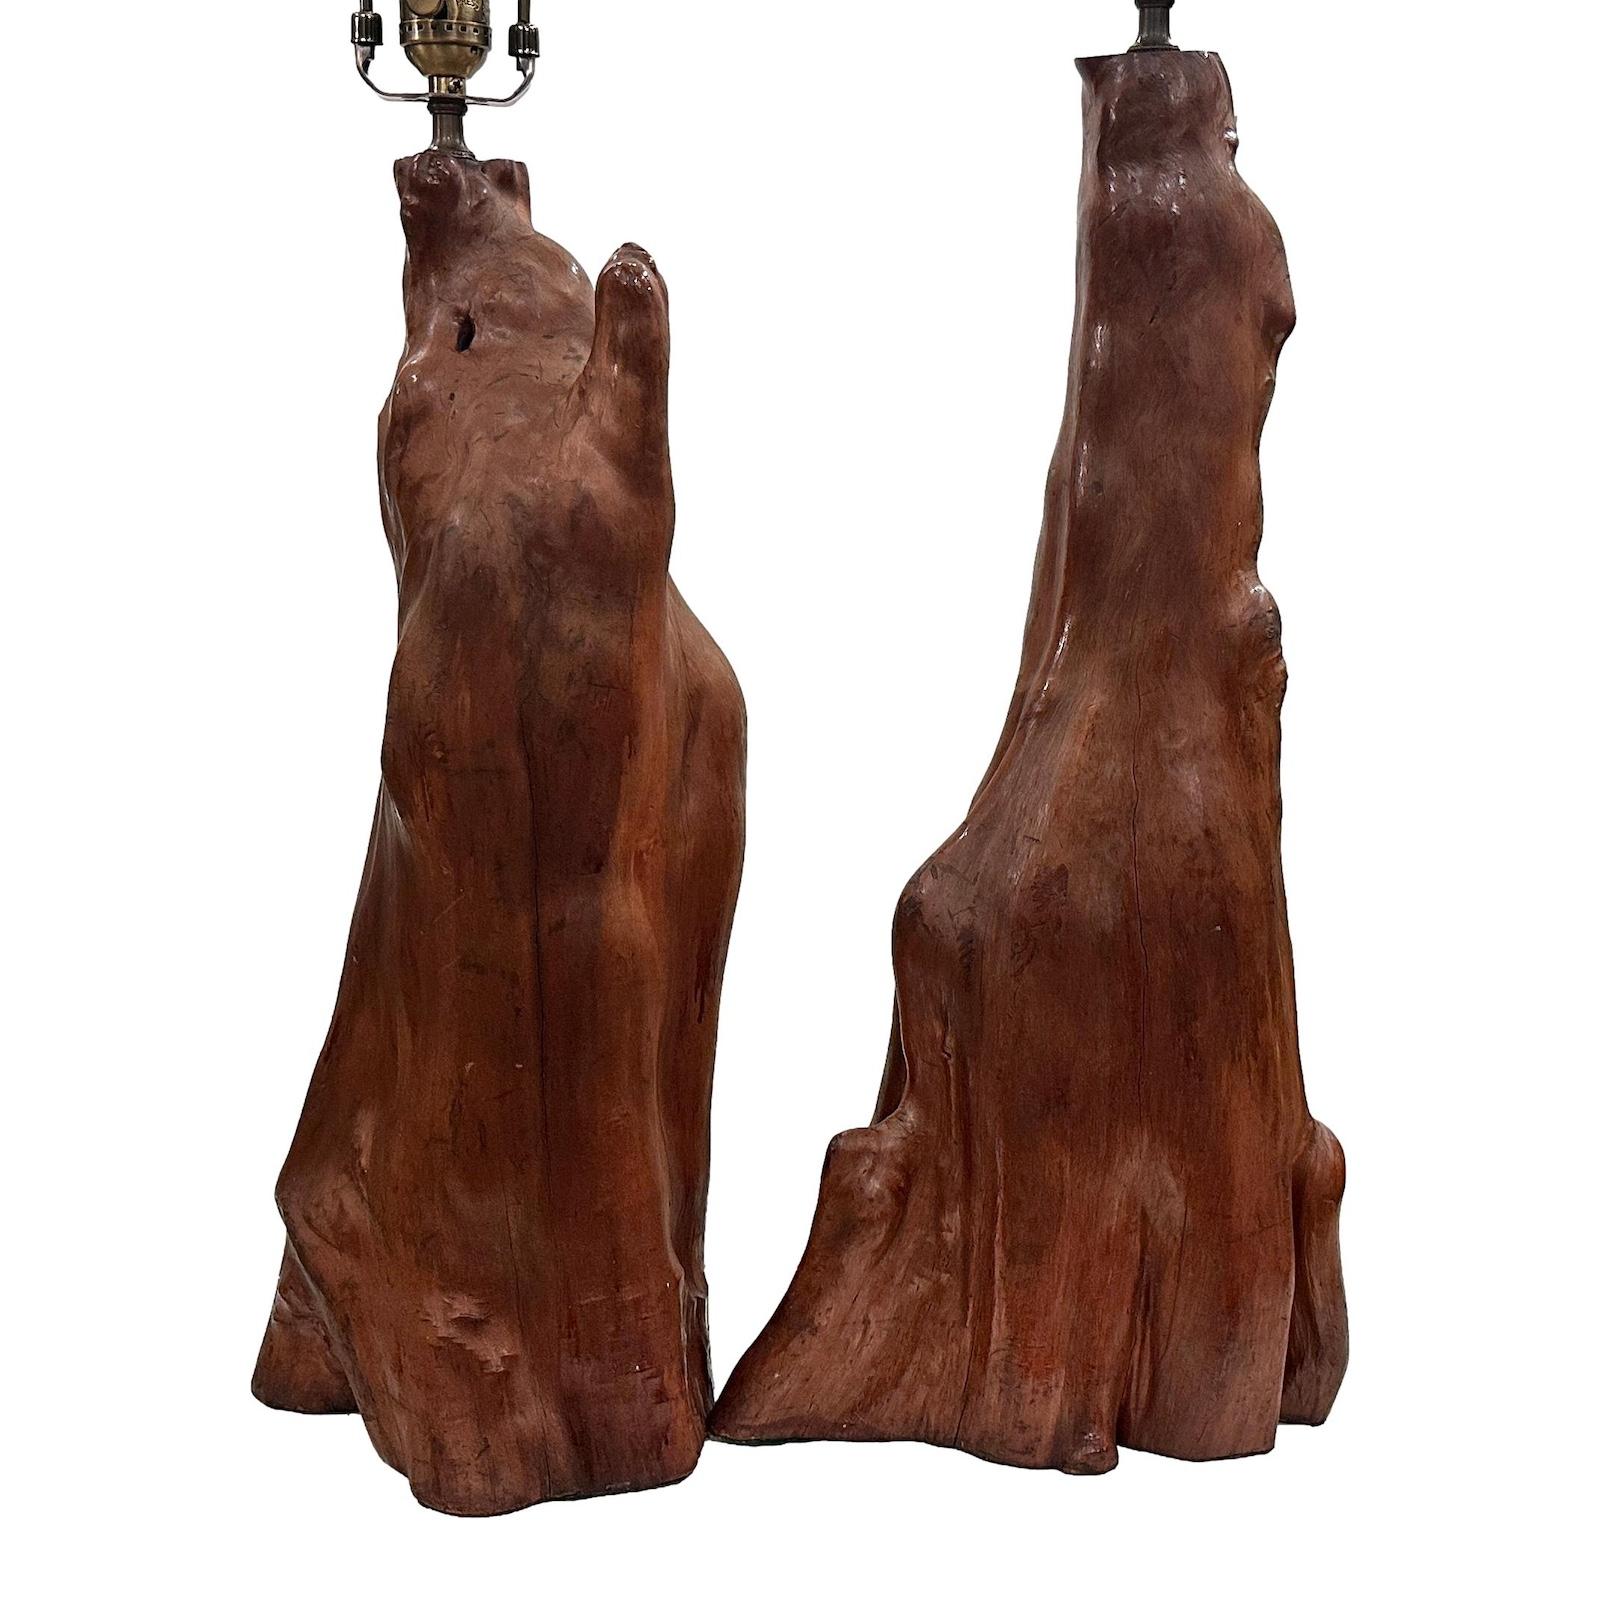 Pair of circa 1960s' Italian wood lamps.

Measurements:
Height of body: 22